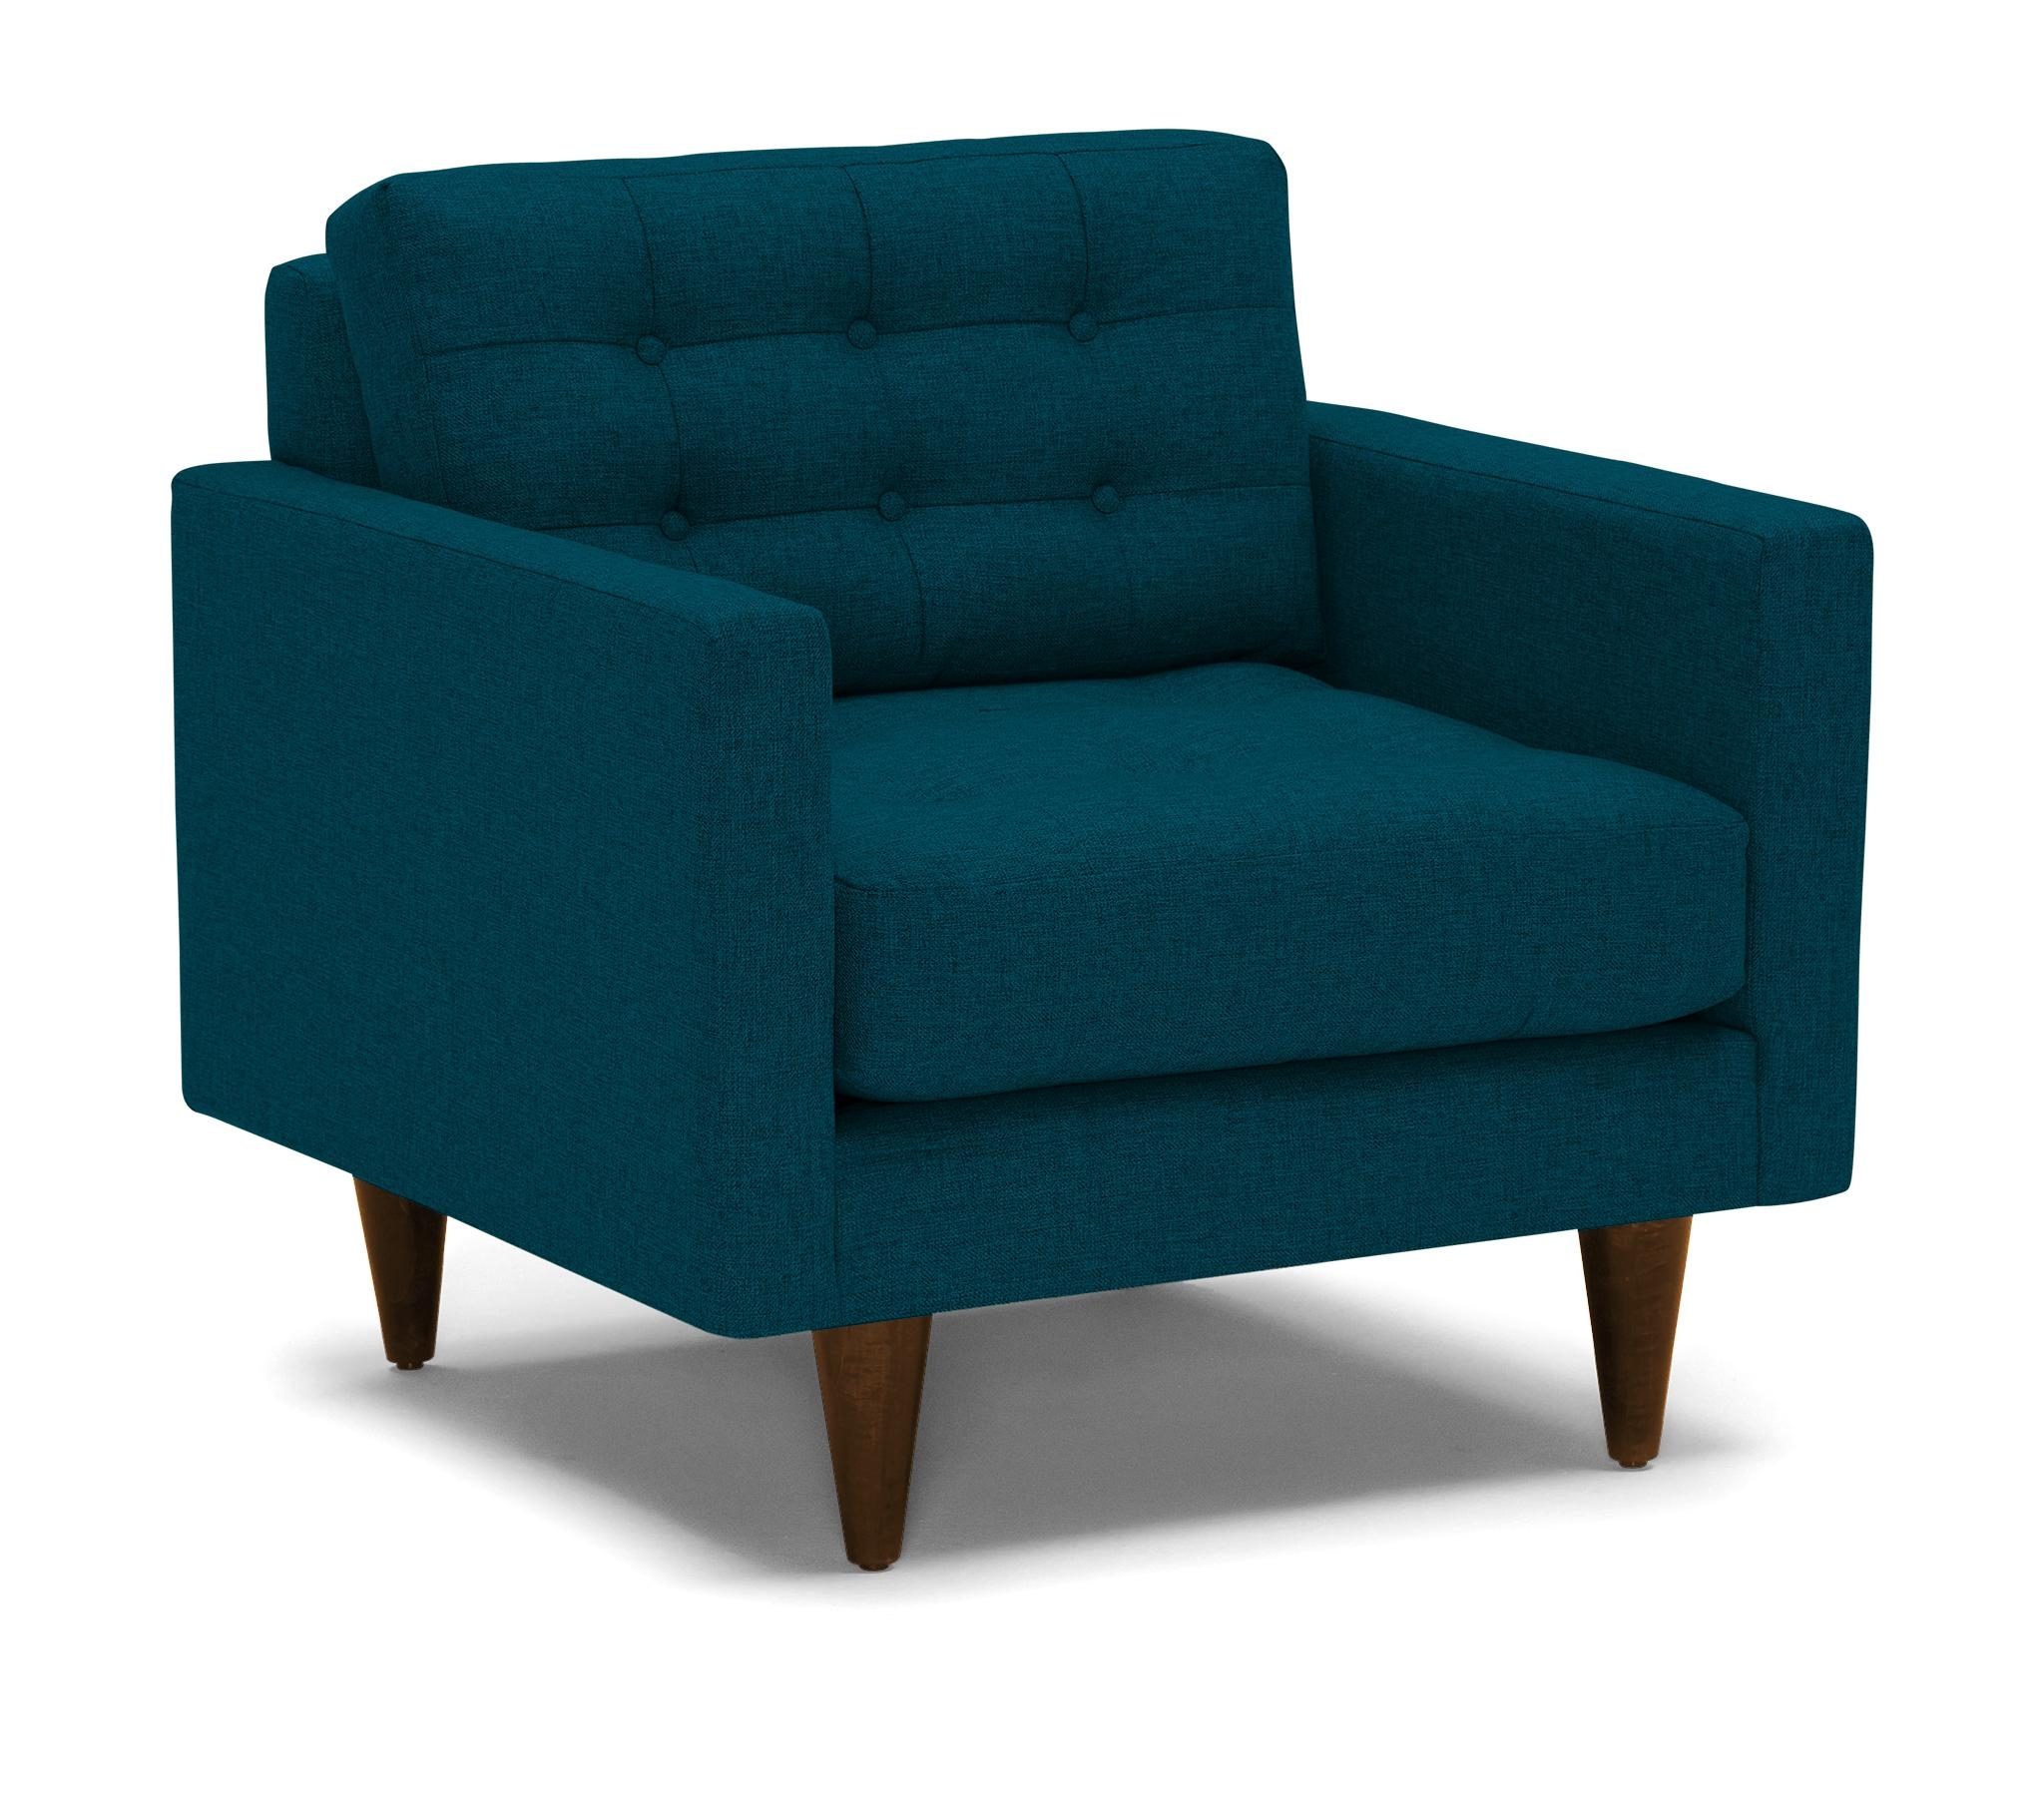 Blue Eliot Mid Century Modern Apartment Chair - Key Largo Zenith Teal - Mocha - Image 1